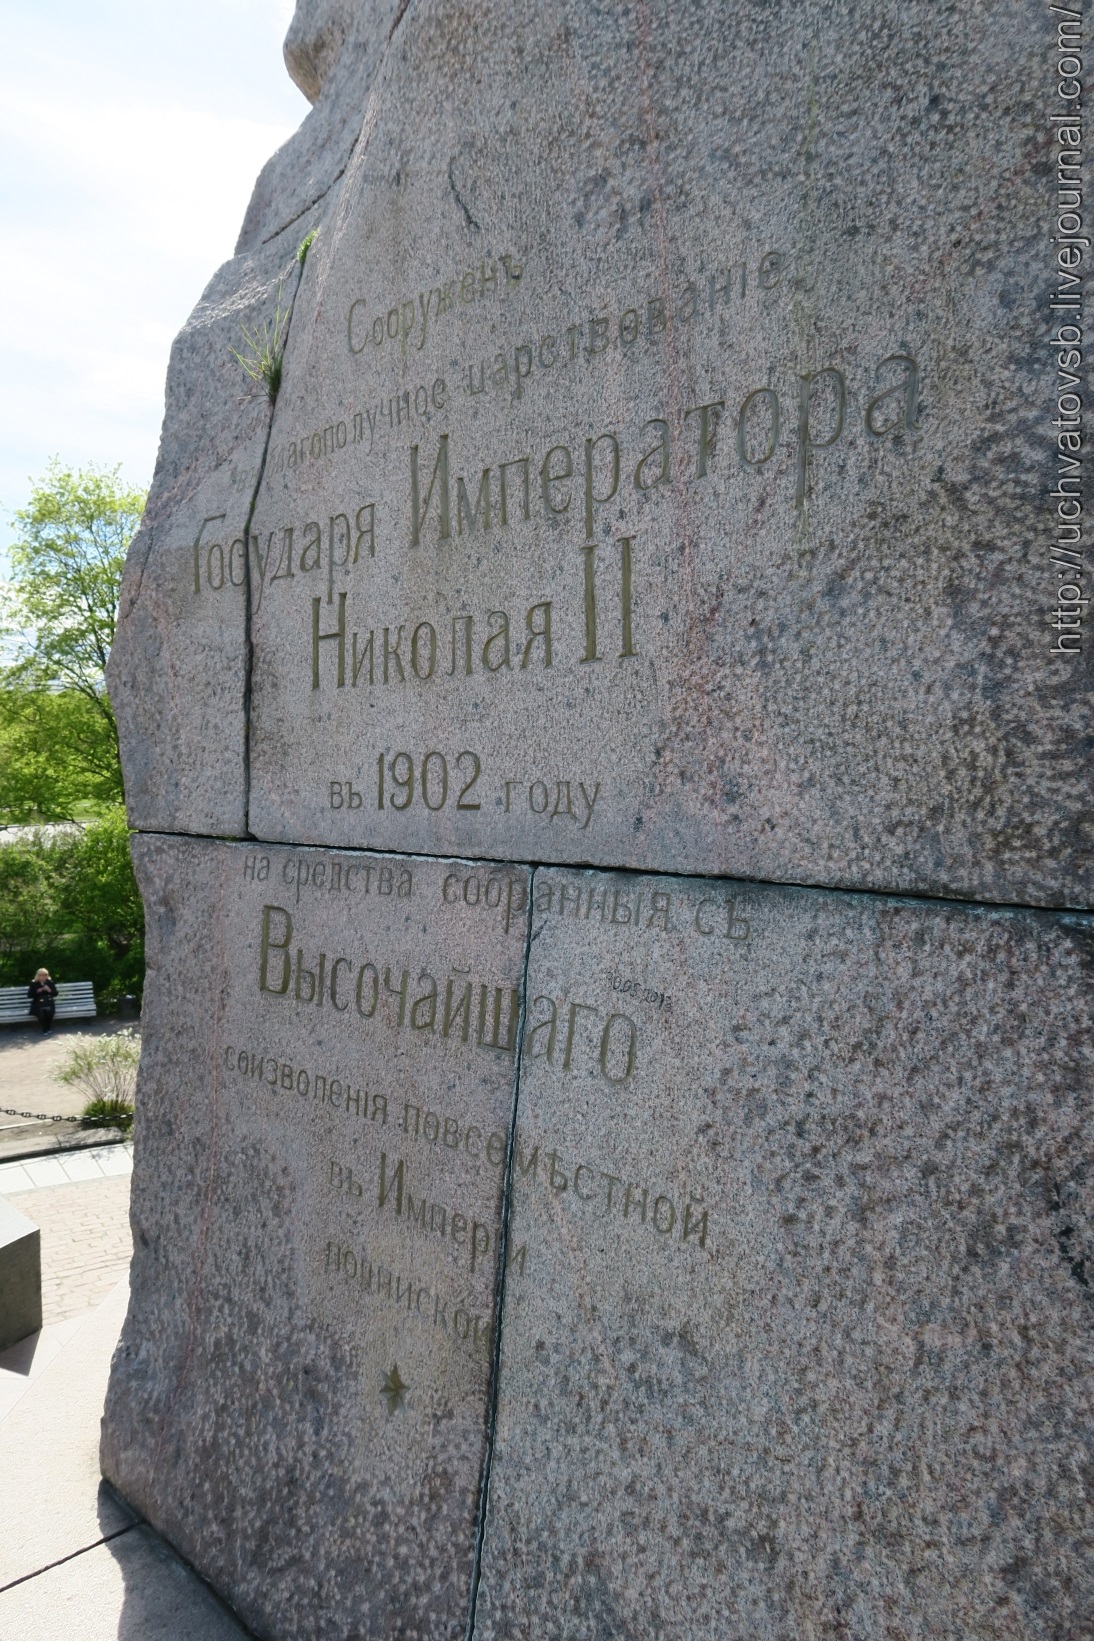 Памятник броненосцу Русалка в Таллине